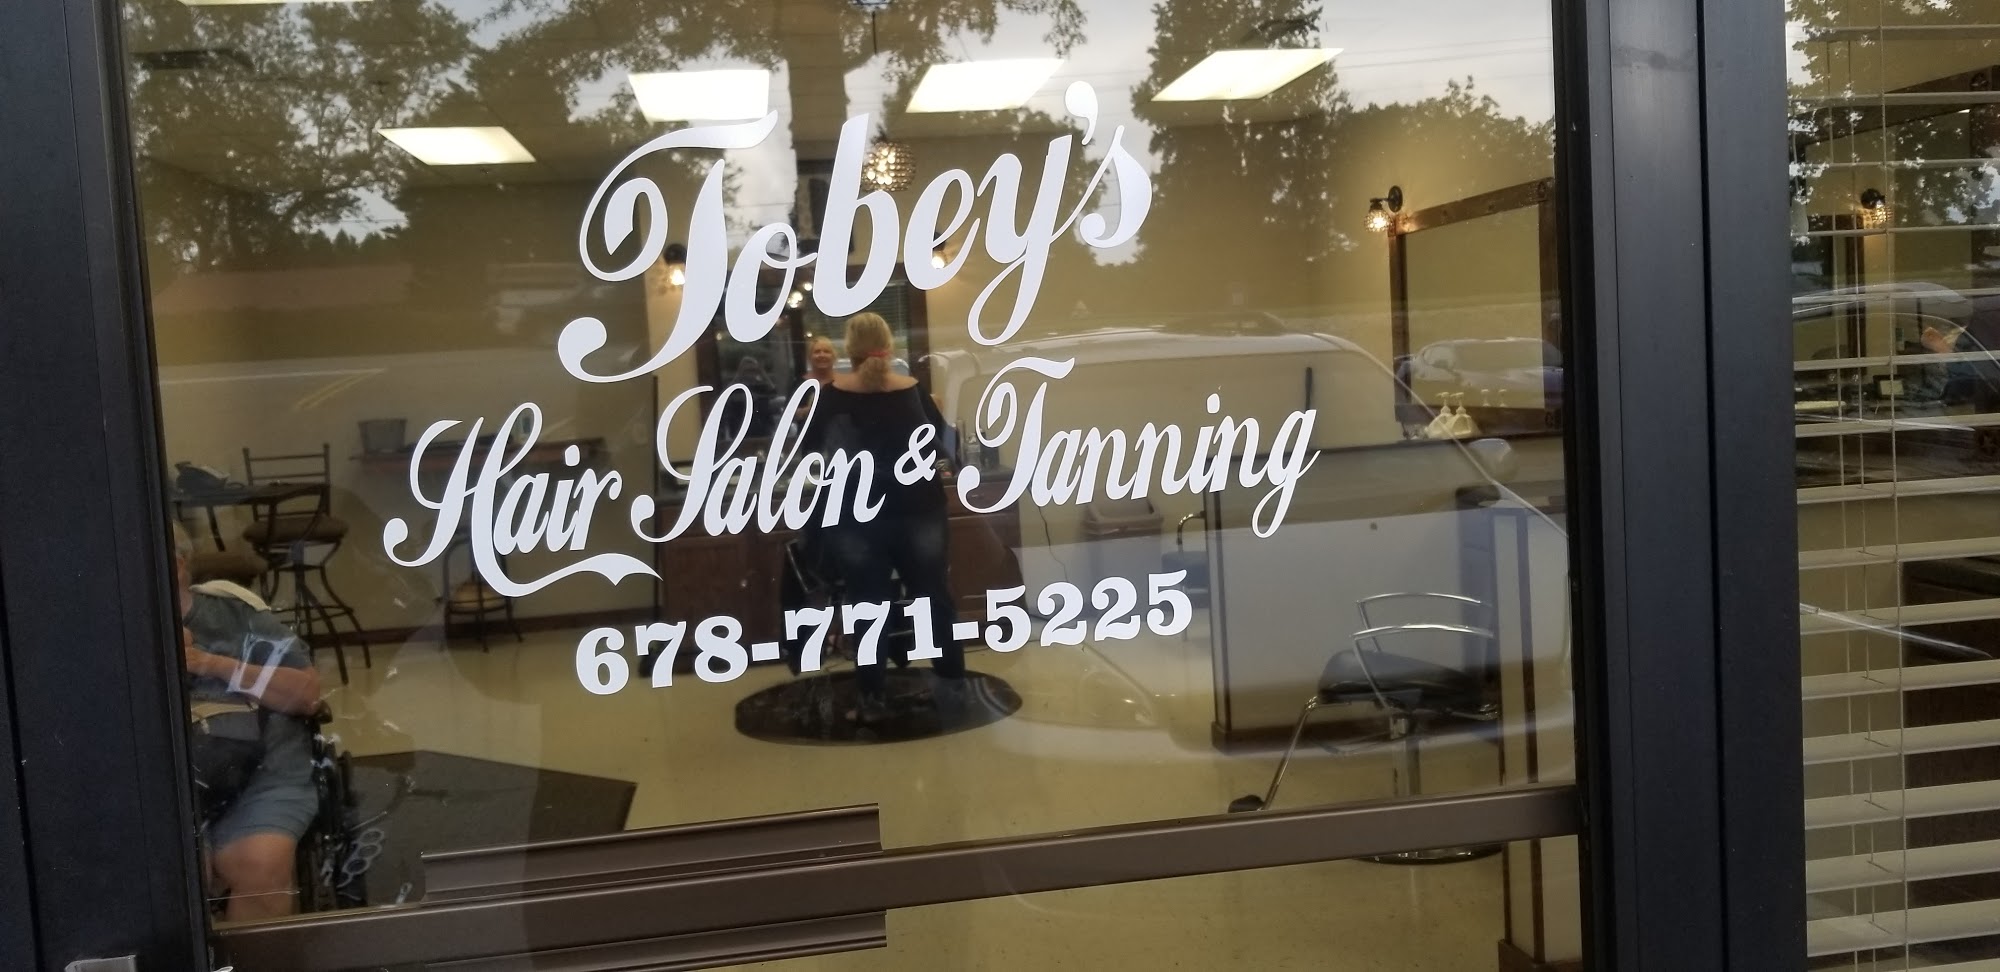 Tobey's Salon & Tanning